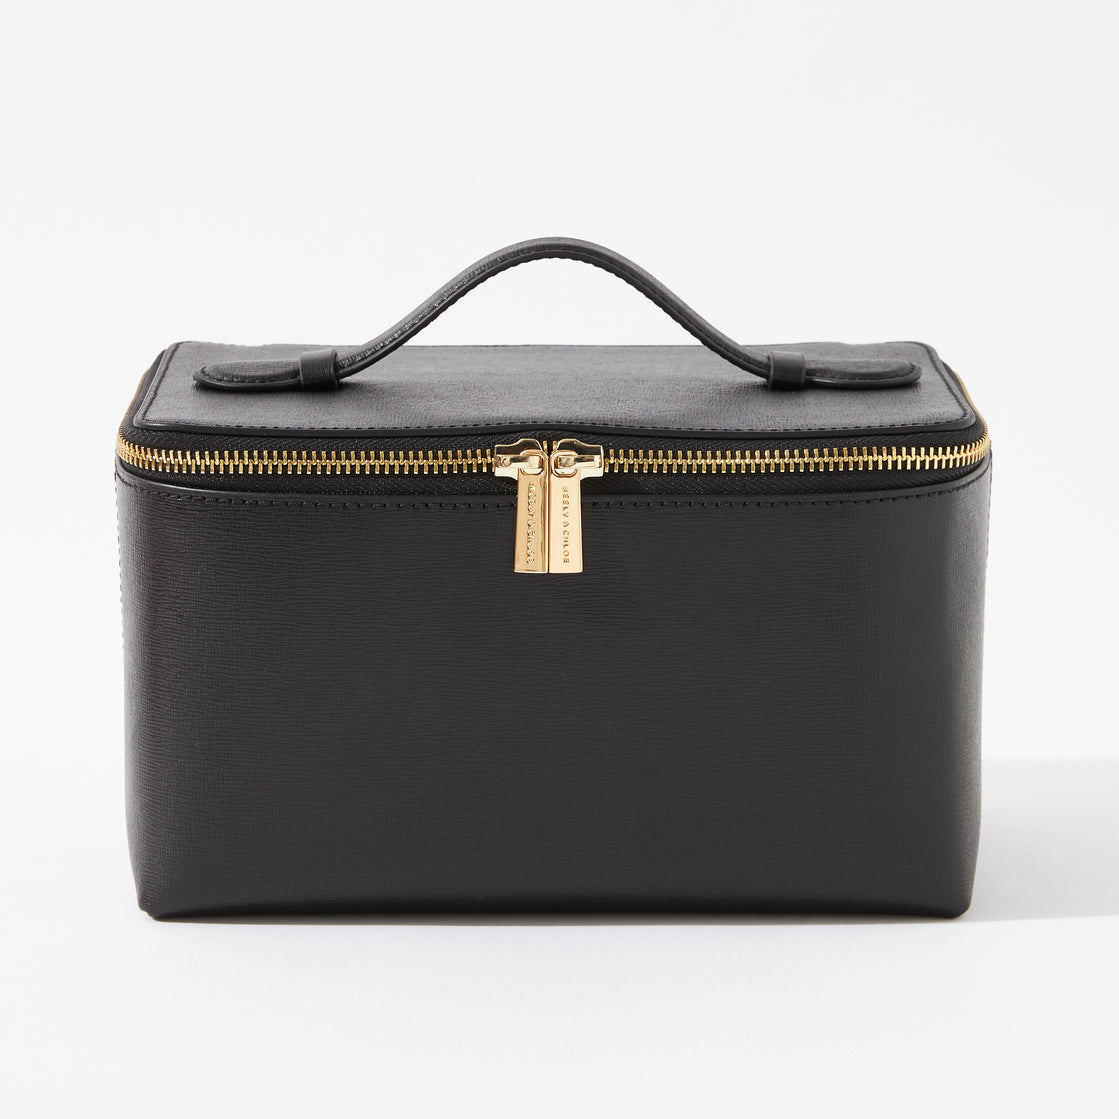 Brand New Authentic In Box Chanel Vanity Case Mini Chain Bag Black Caviar  GHW | eBay